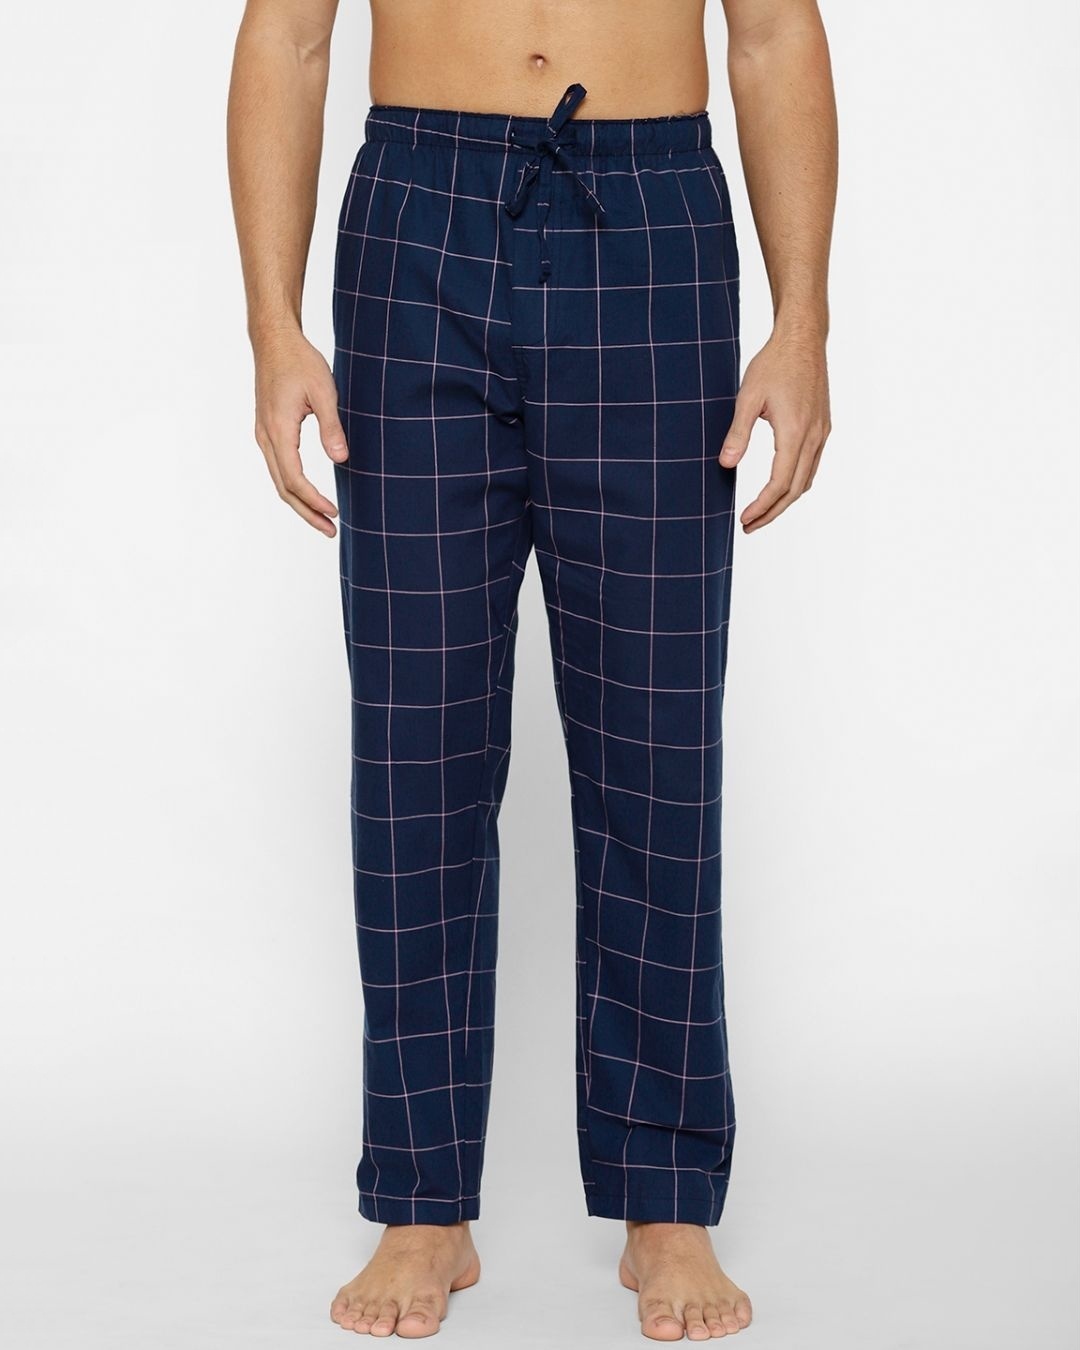 Shop Men's Black Super Combed Cotton Checkered Pyjama (Pack of 2)-Design